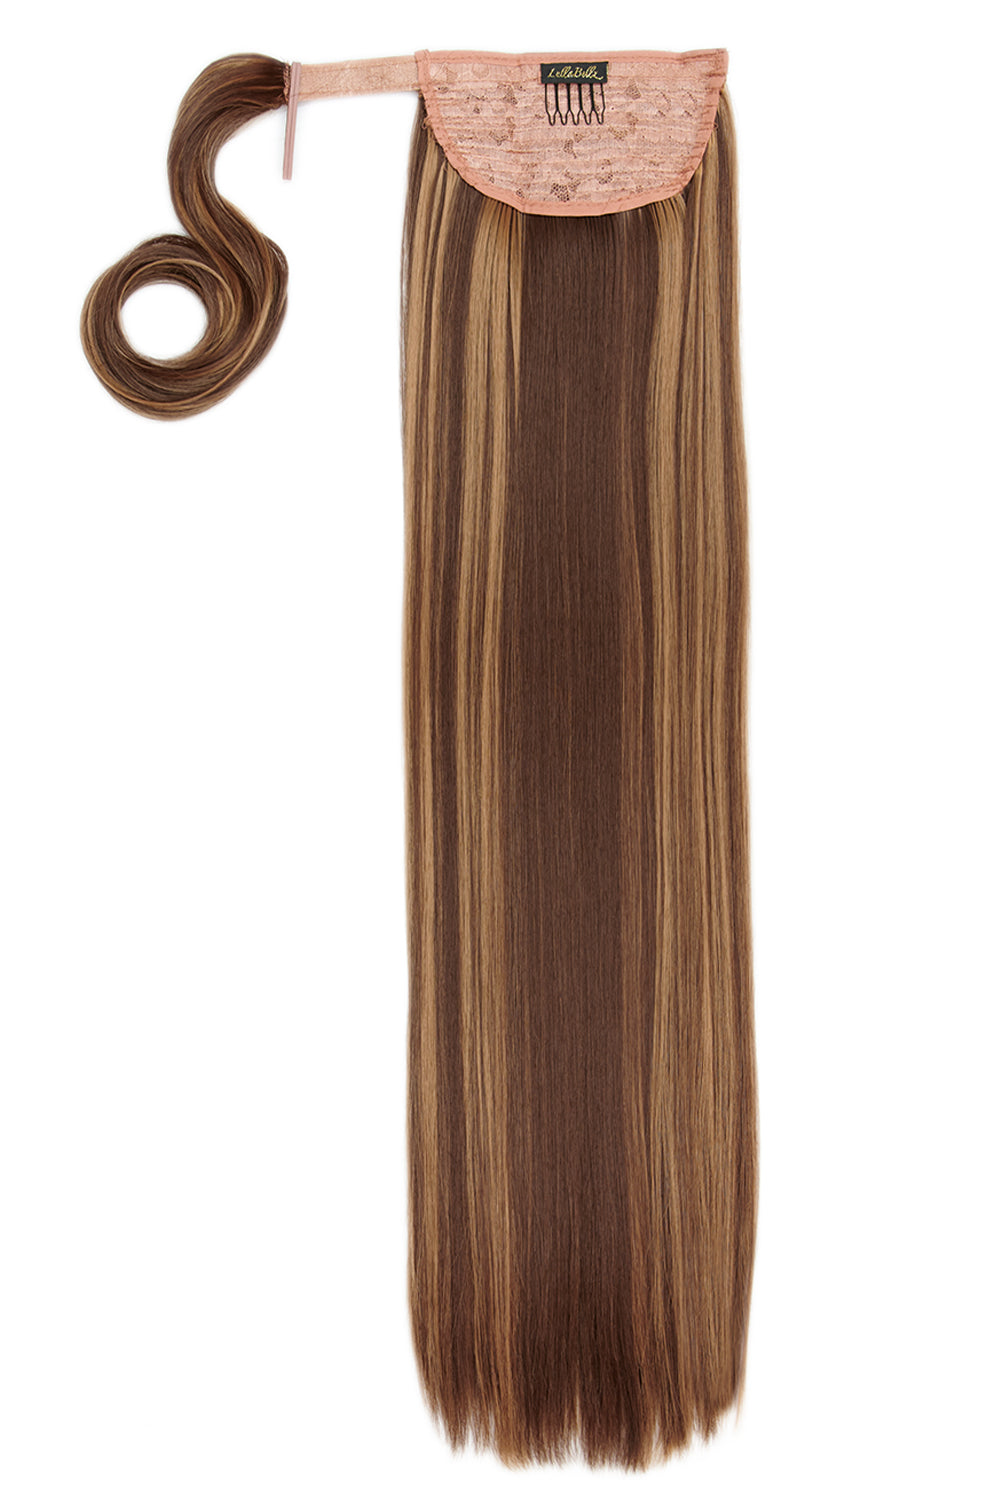 Grande Lengths 26" Straight Wraparound Ponytail - Blondette